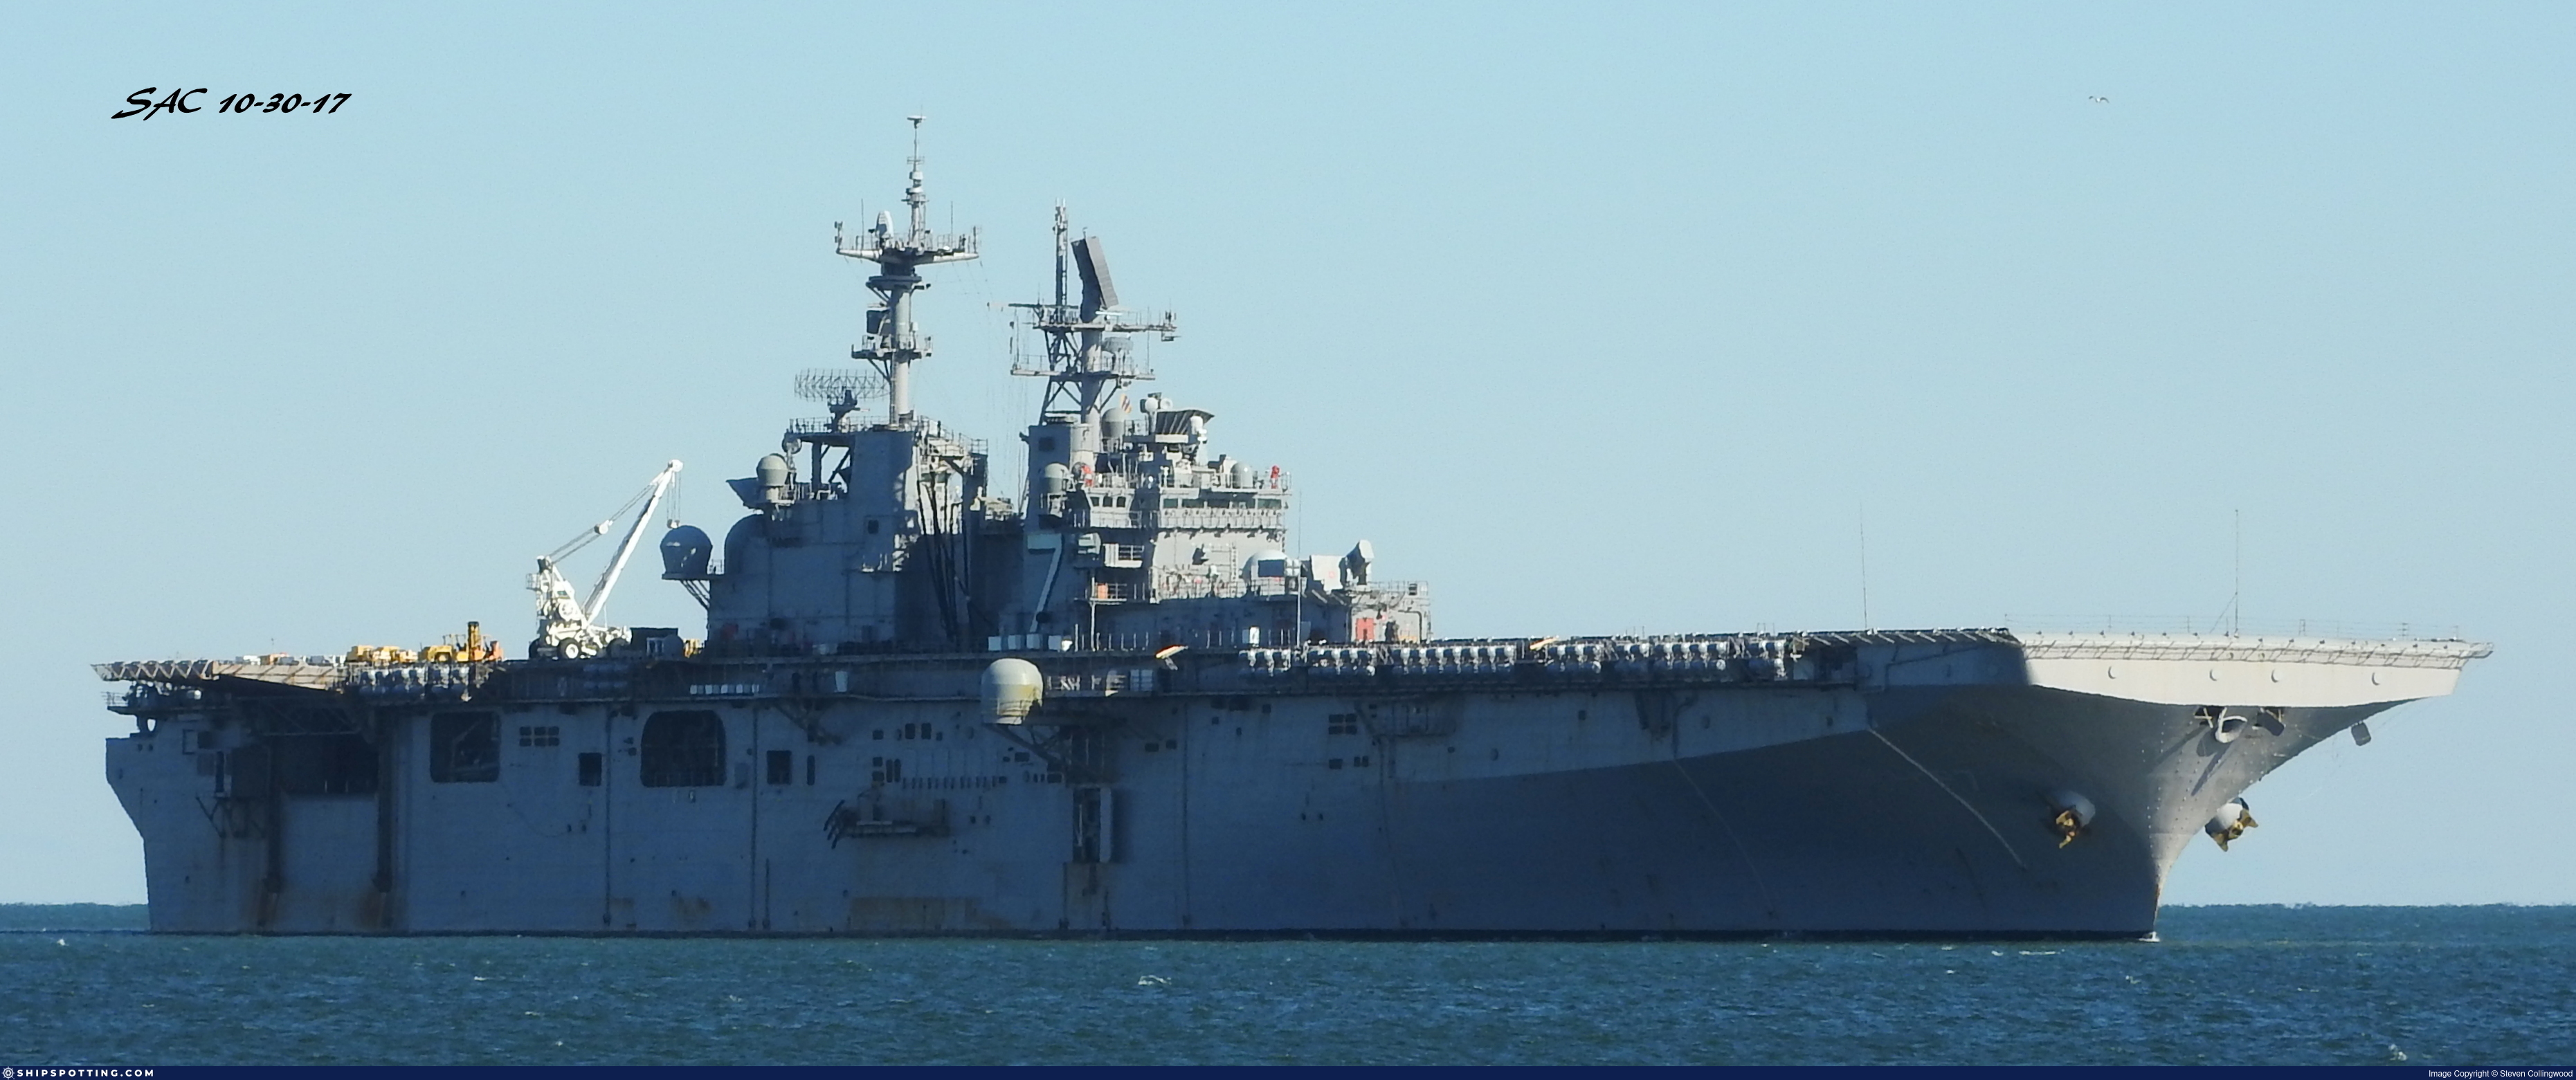 USS Iwo Jima LHD7 - IMO 4681668 - ShipSpotting.com - Ship Photos,  Information, Videos and Ship Tracker